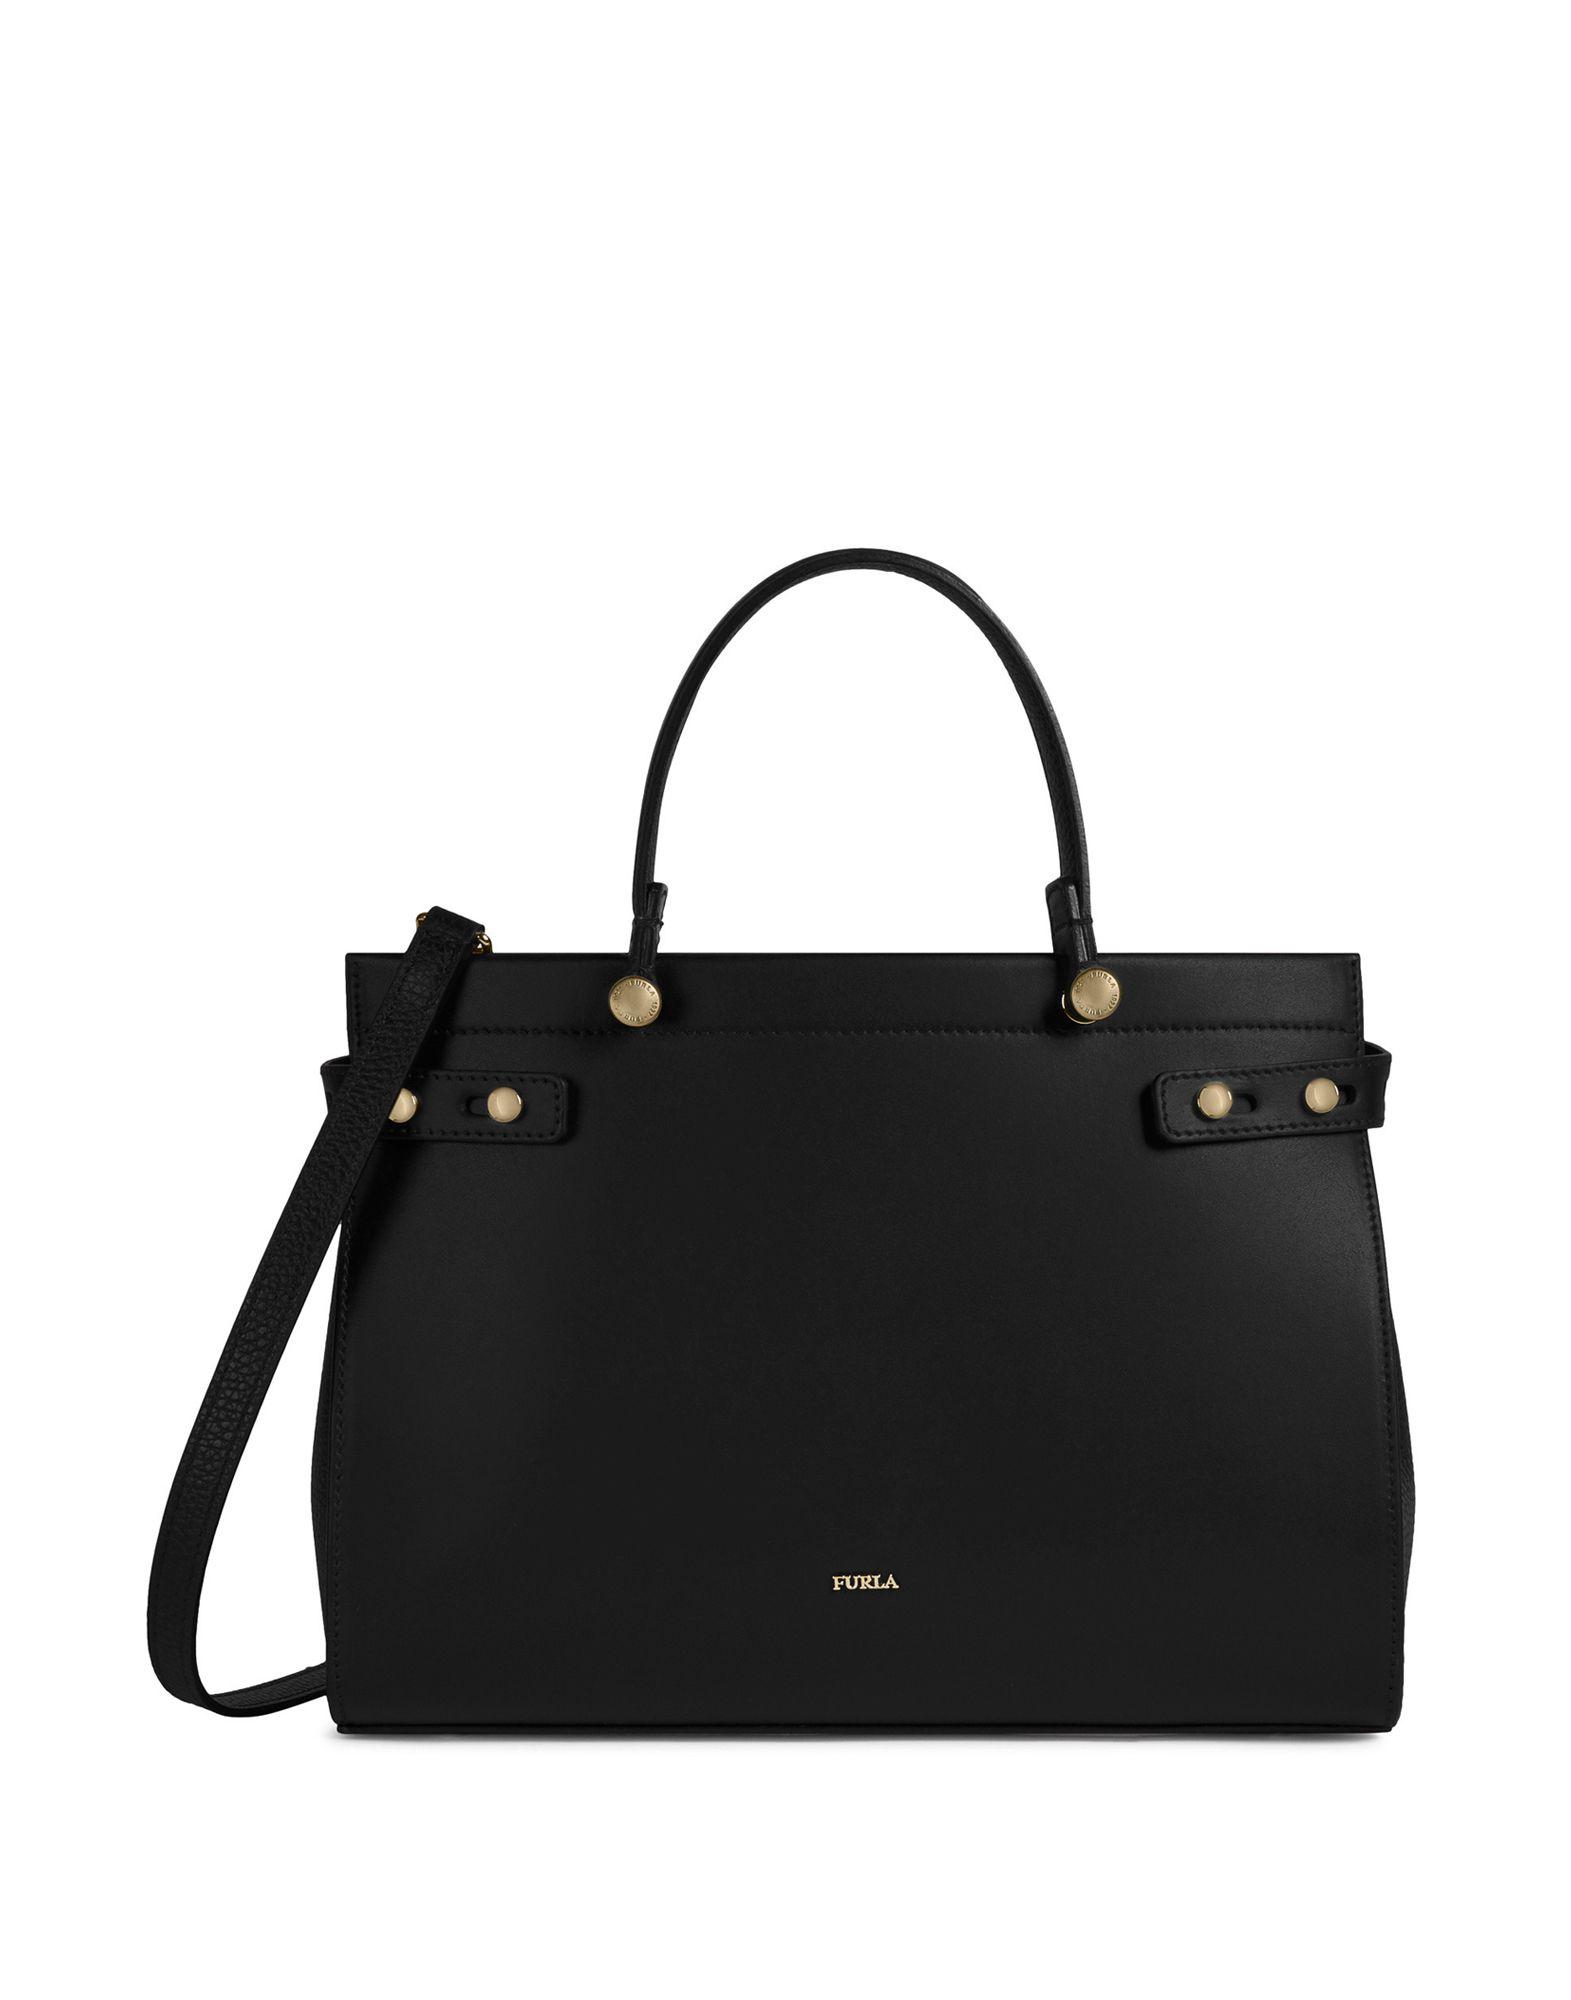 Furla Leather Handbag in Black - Lyst